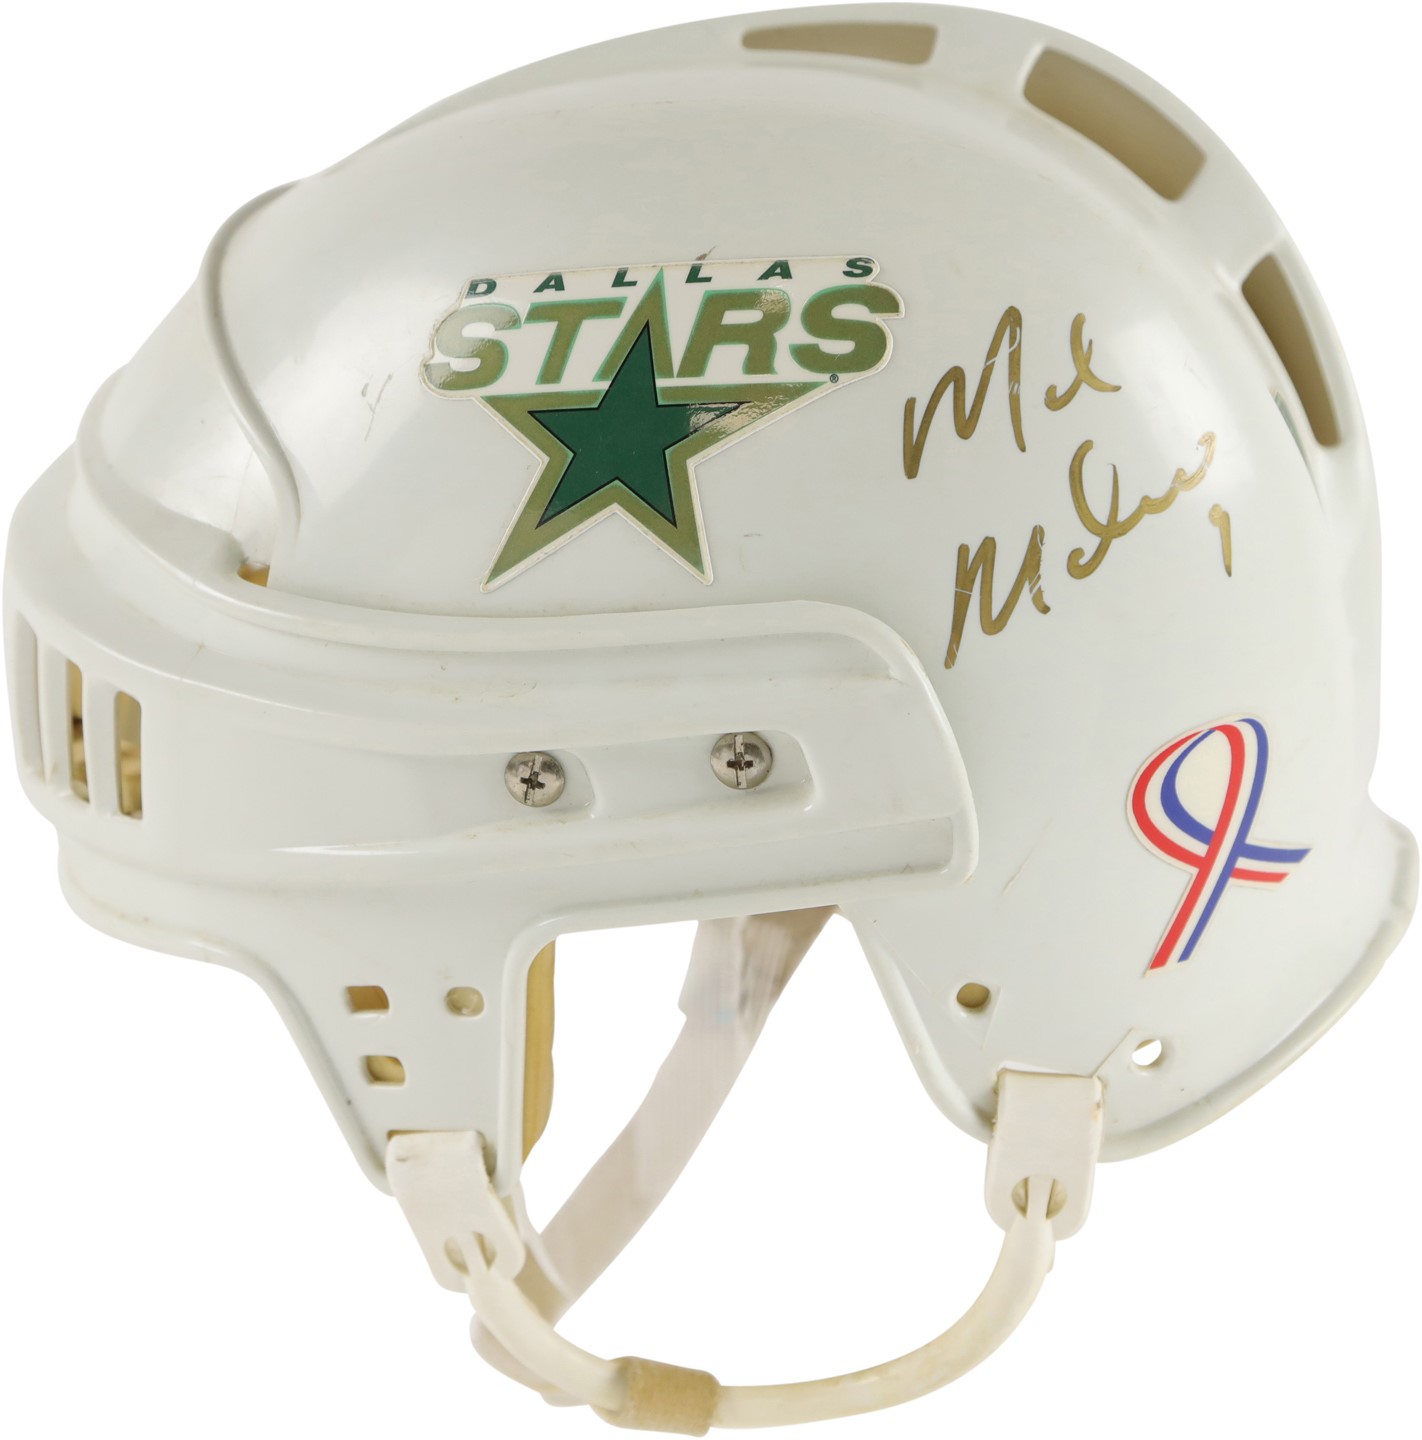 Hockey - 1998-99 Mike Modano Dallas Stars Signed Game Worn Helmet - Stanley Cup Championship Season